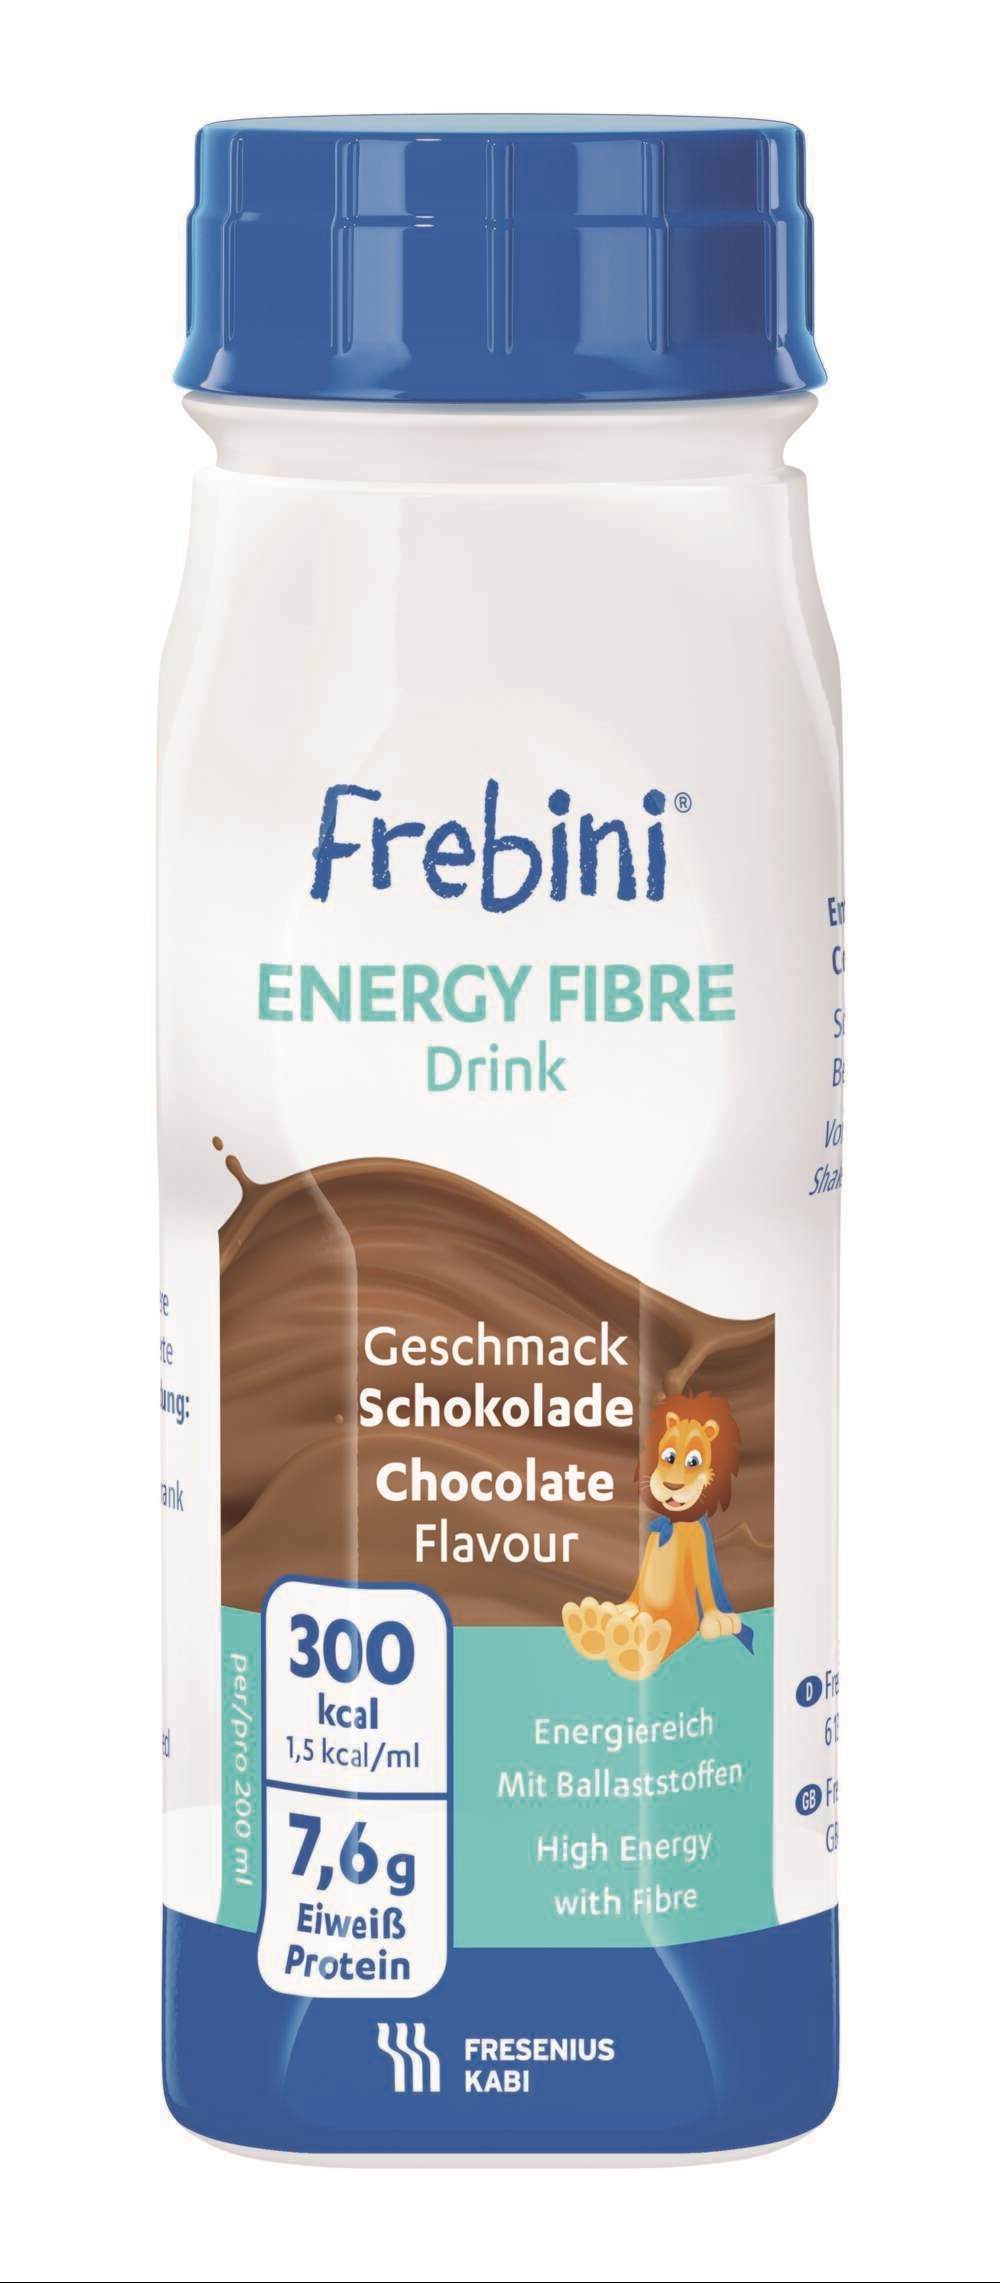 Frebini energy fibre DRINK - 4x200ml choklad - 4 st/förp.